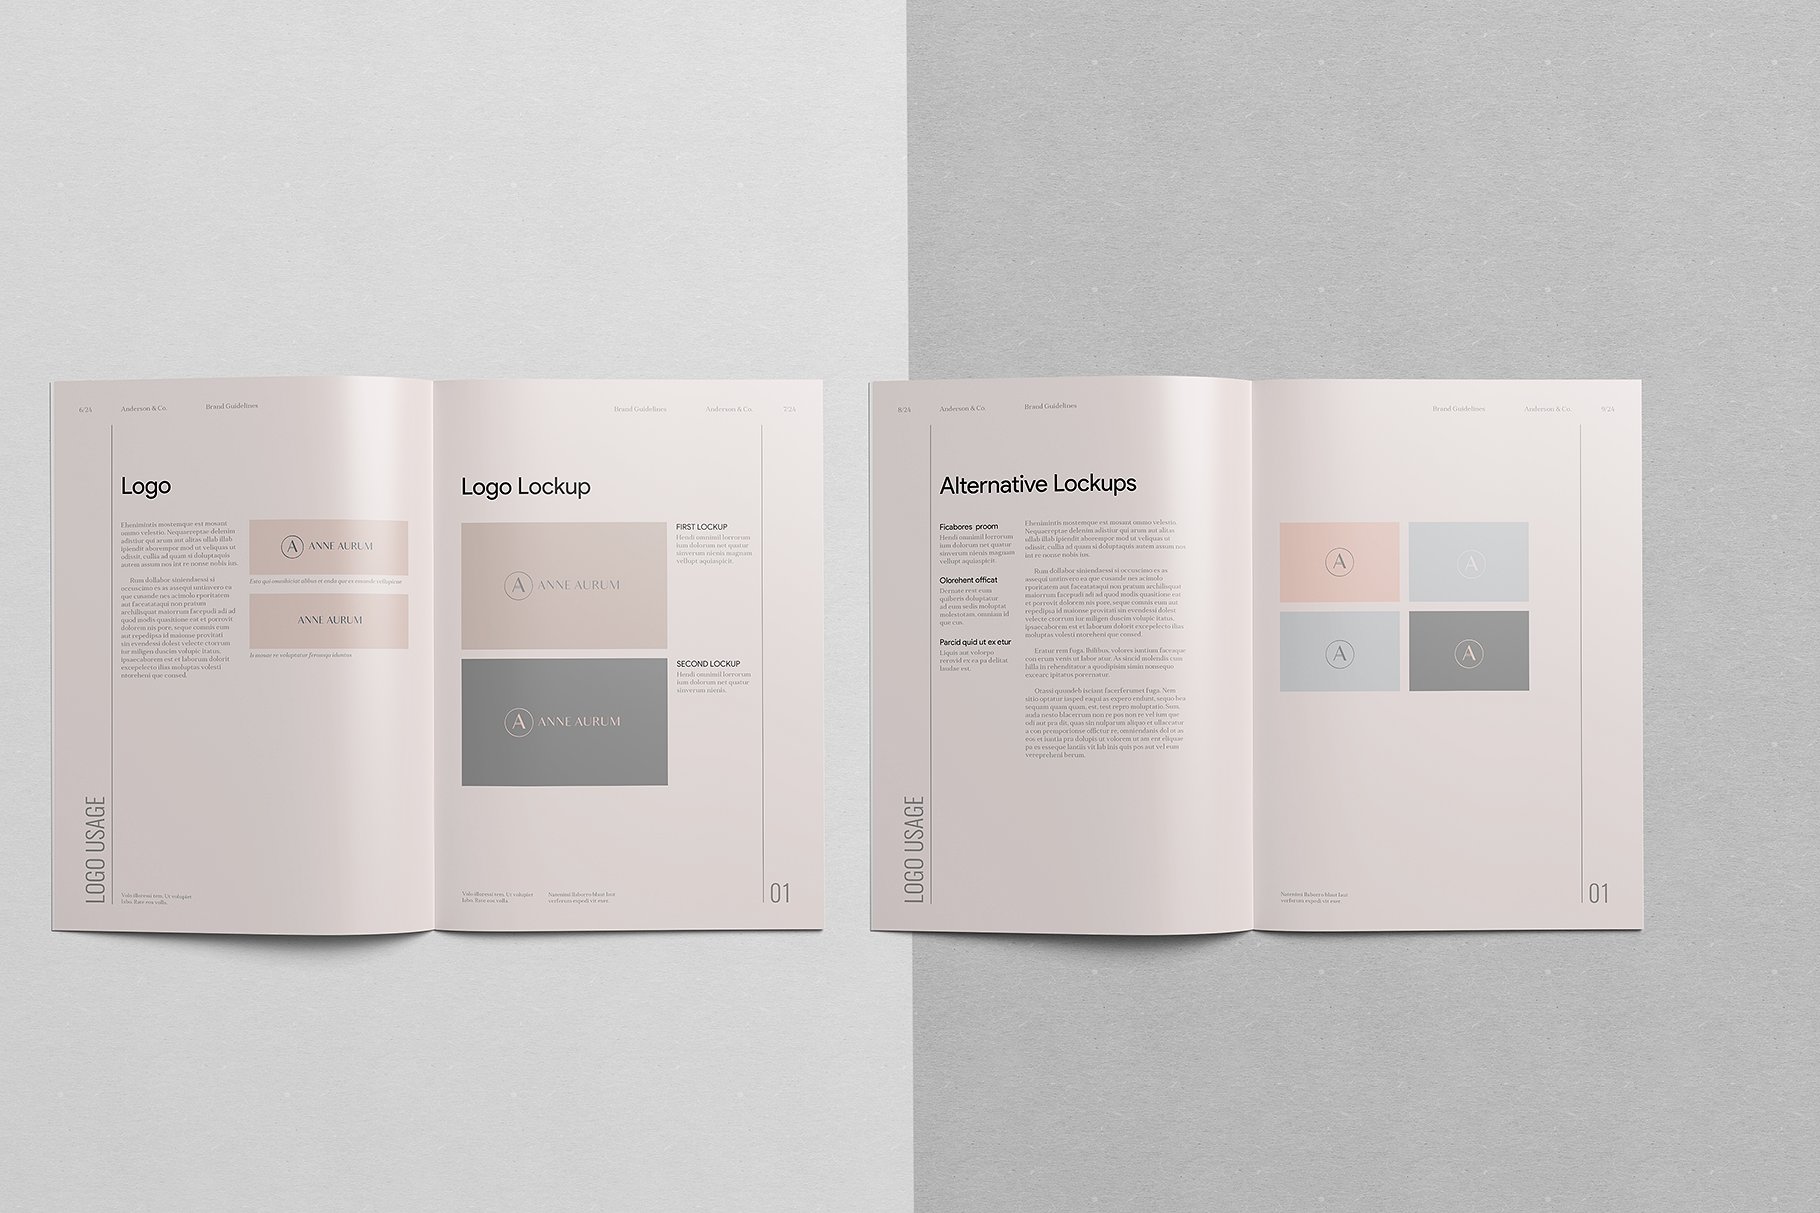 现代简约的品牌设计手册 Anderson Brand Guidelines插图1